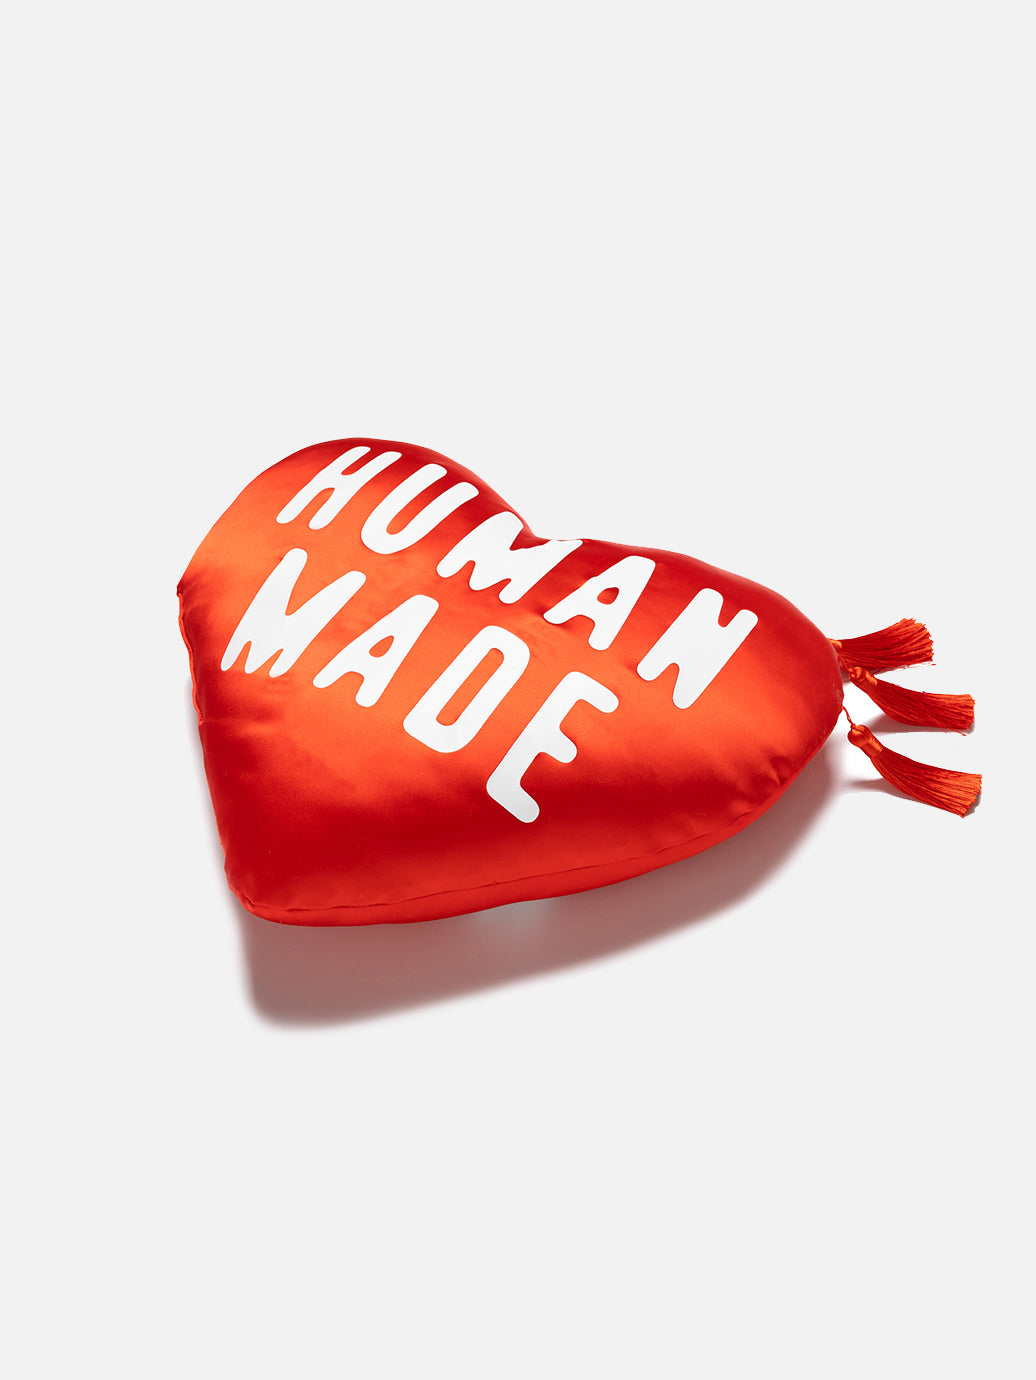 Human Made Heart Cushion Red